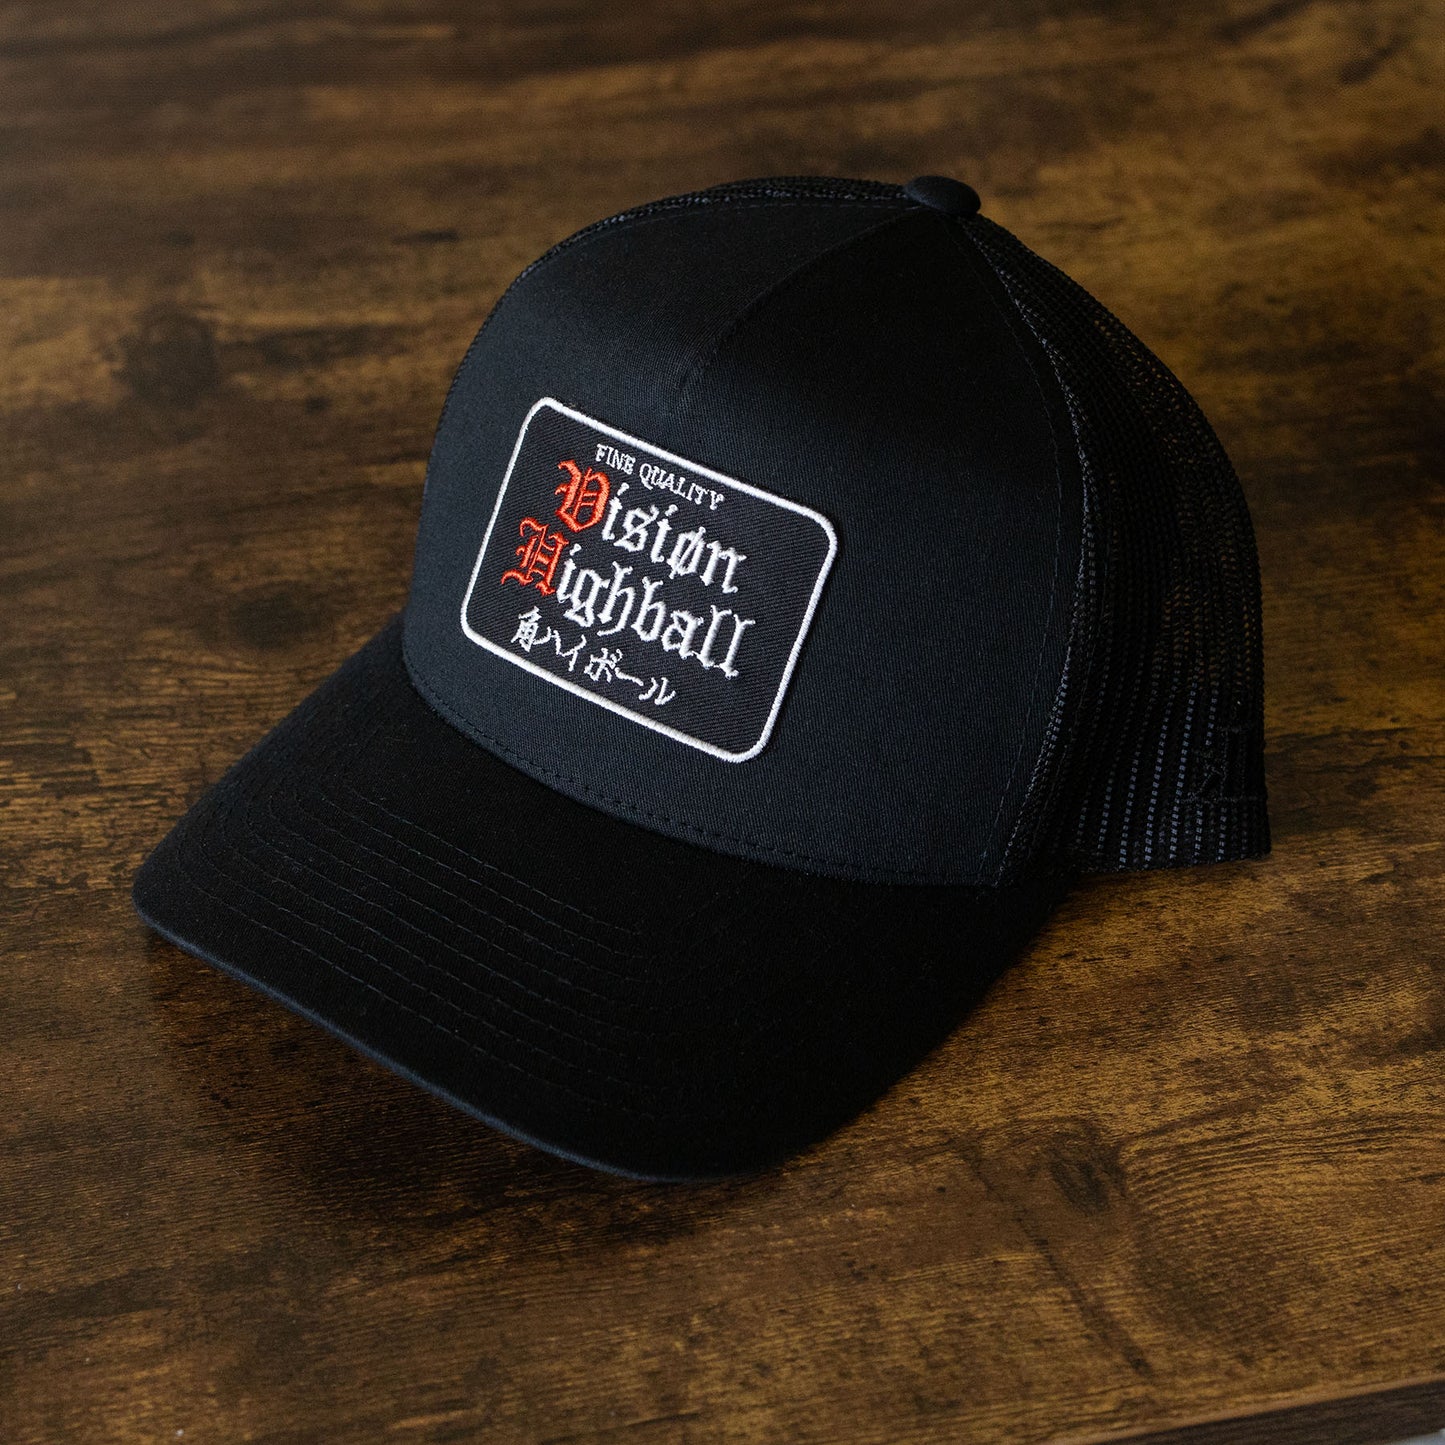 [Vision] Highball Trucker Hat / Black - IKendoit.Shop